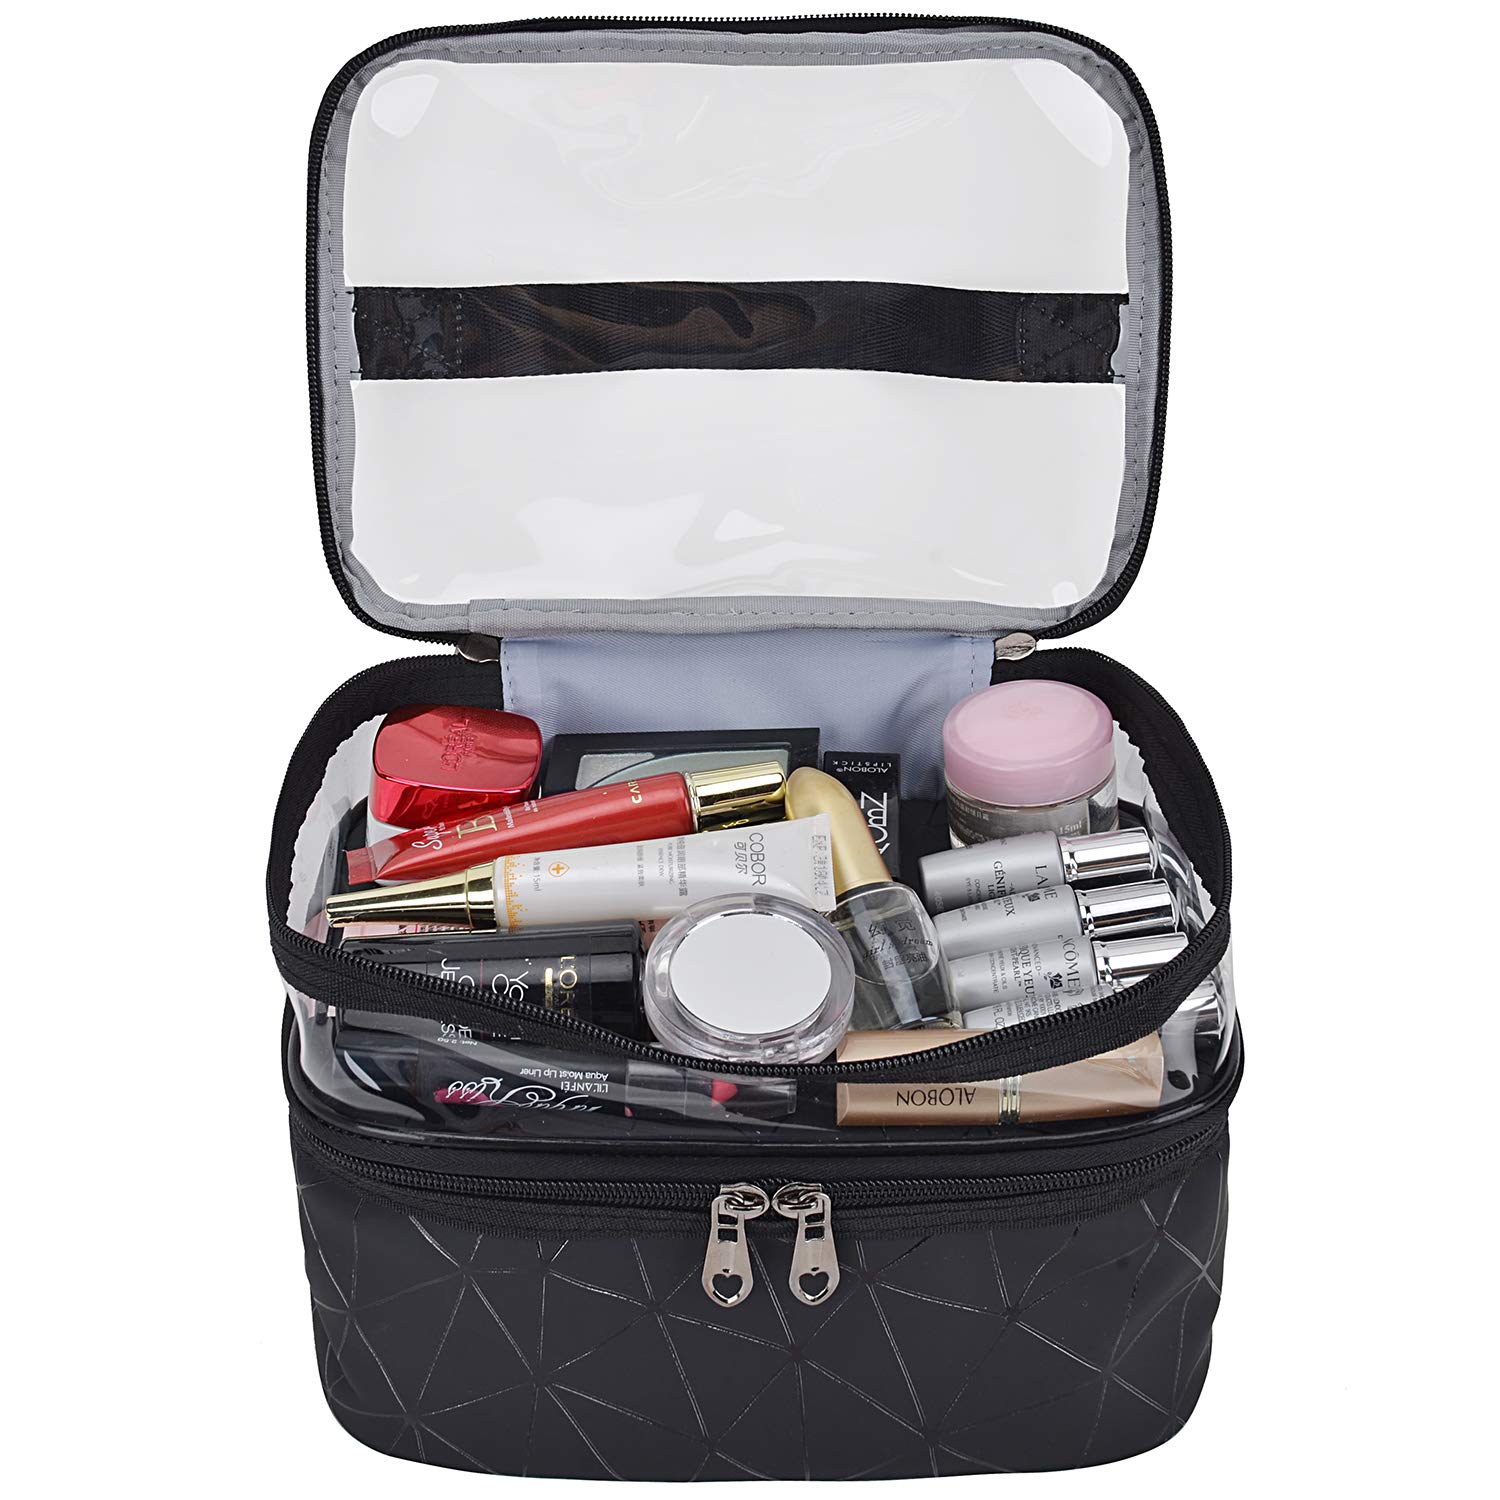 EIMELI Travel Makeup Bag, Women Cosmetic Bag Insert Organizer